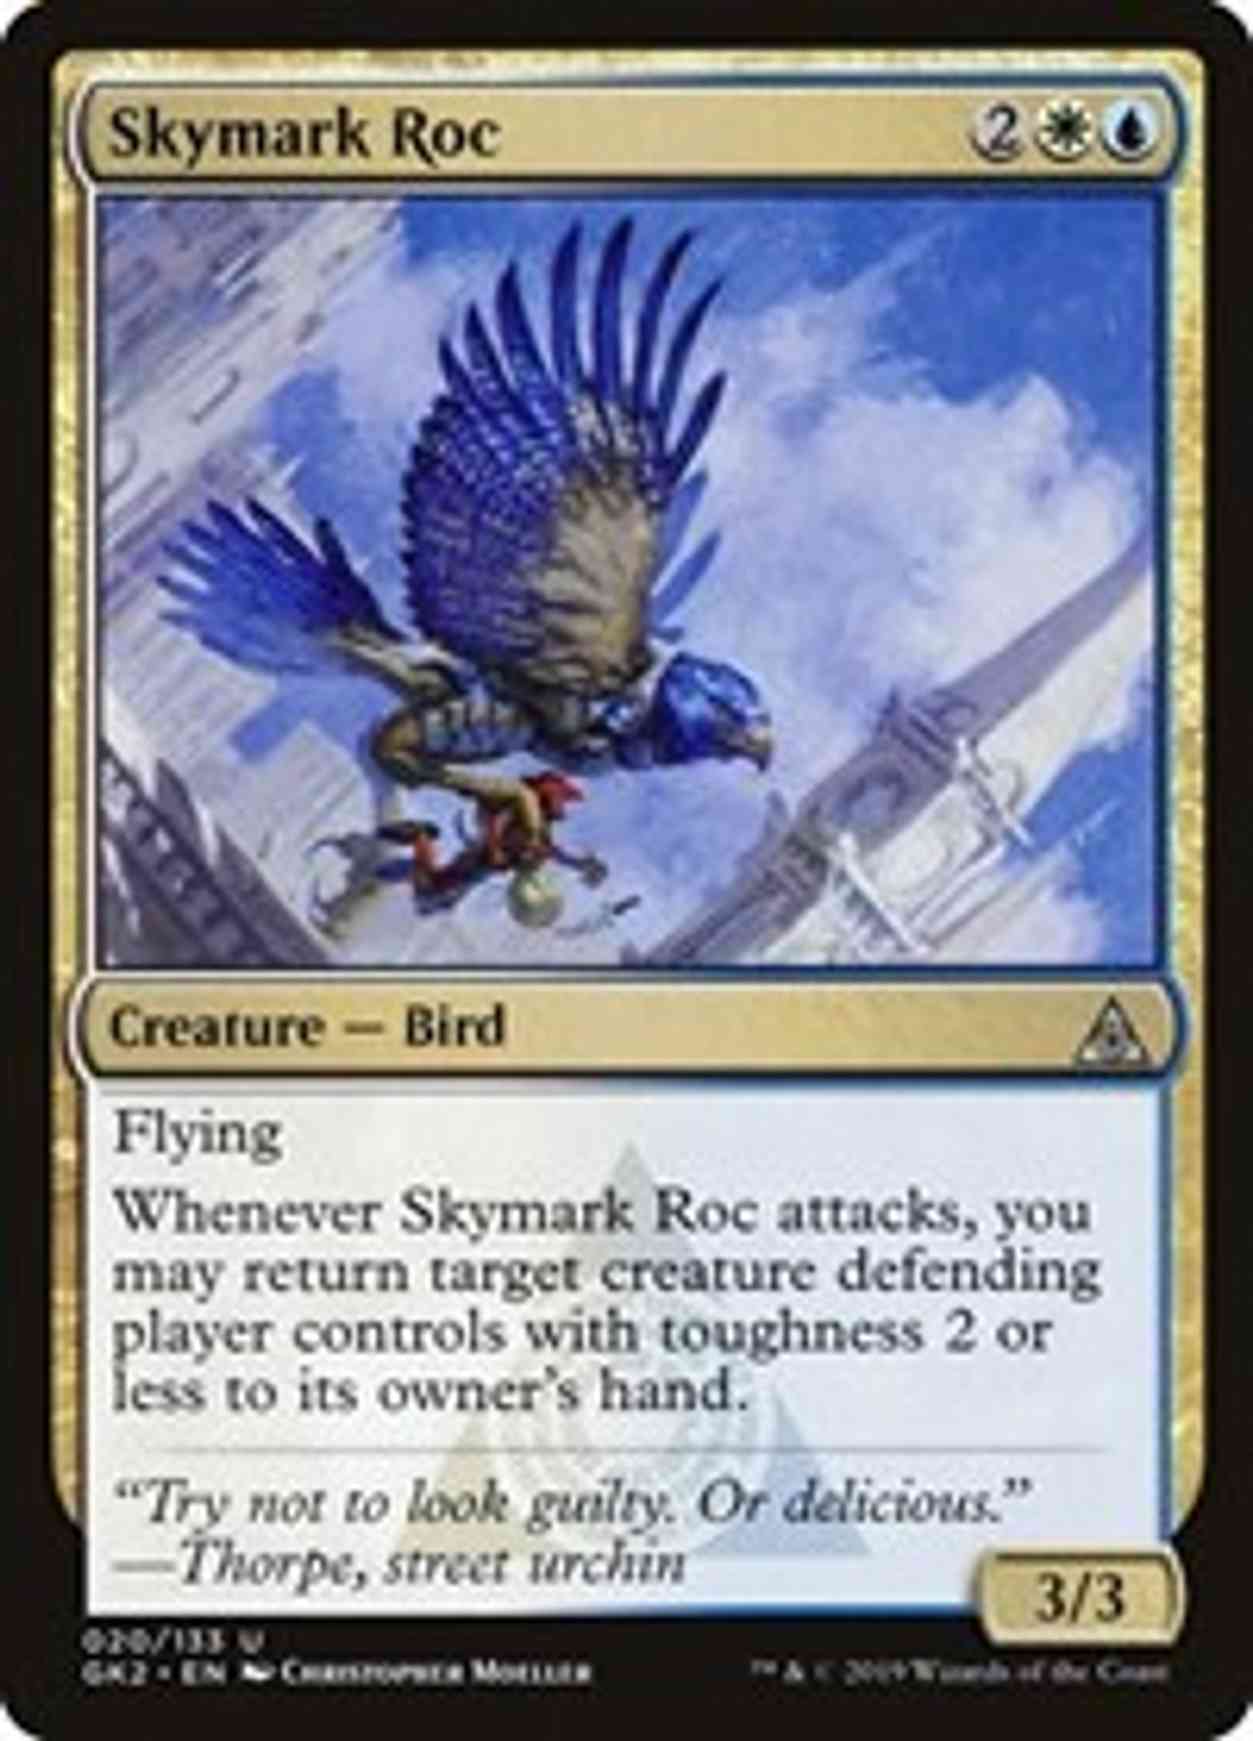 Skymark Roc magic card front